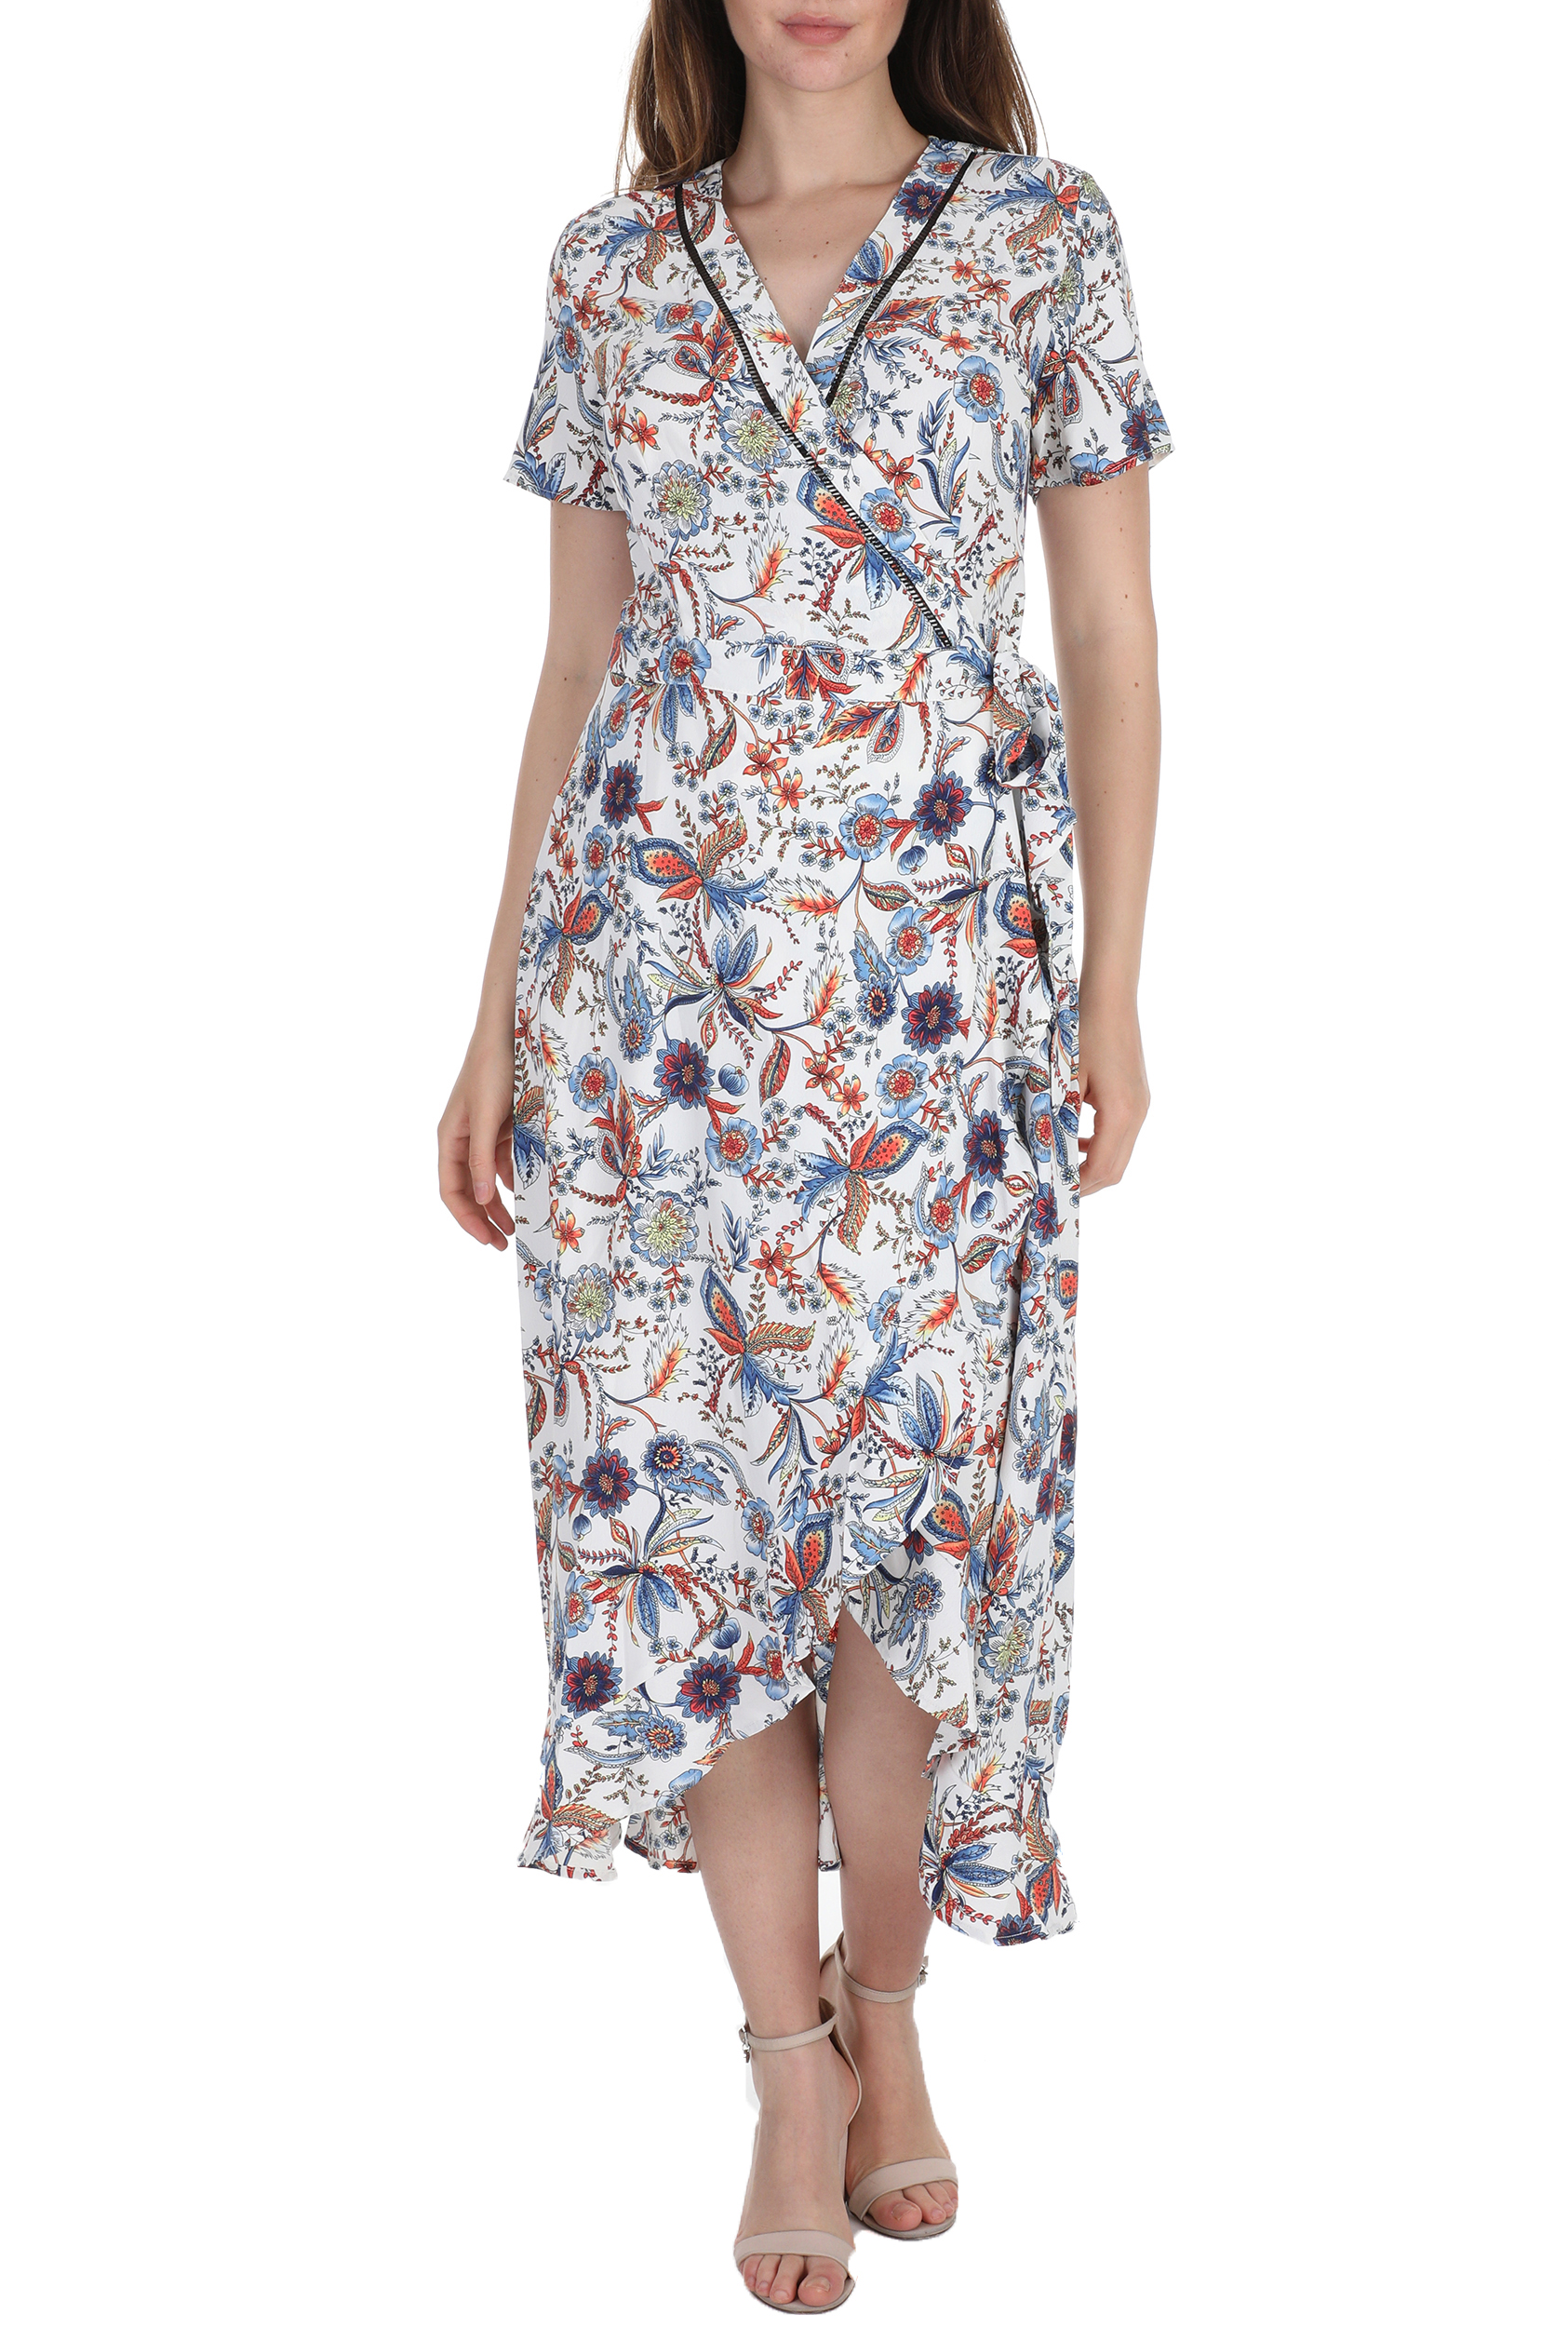 MOLLY BRACKEN – Γυναικείο maxi φόρεμα MOLLY BRACKEN λευκό μπλε 1783166.0-0019